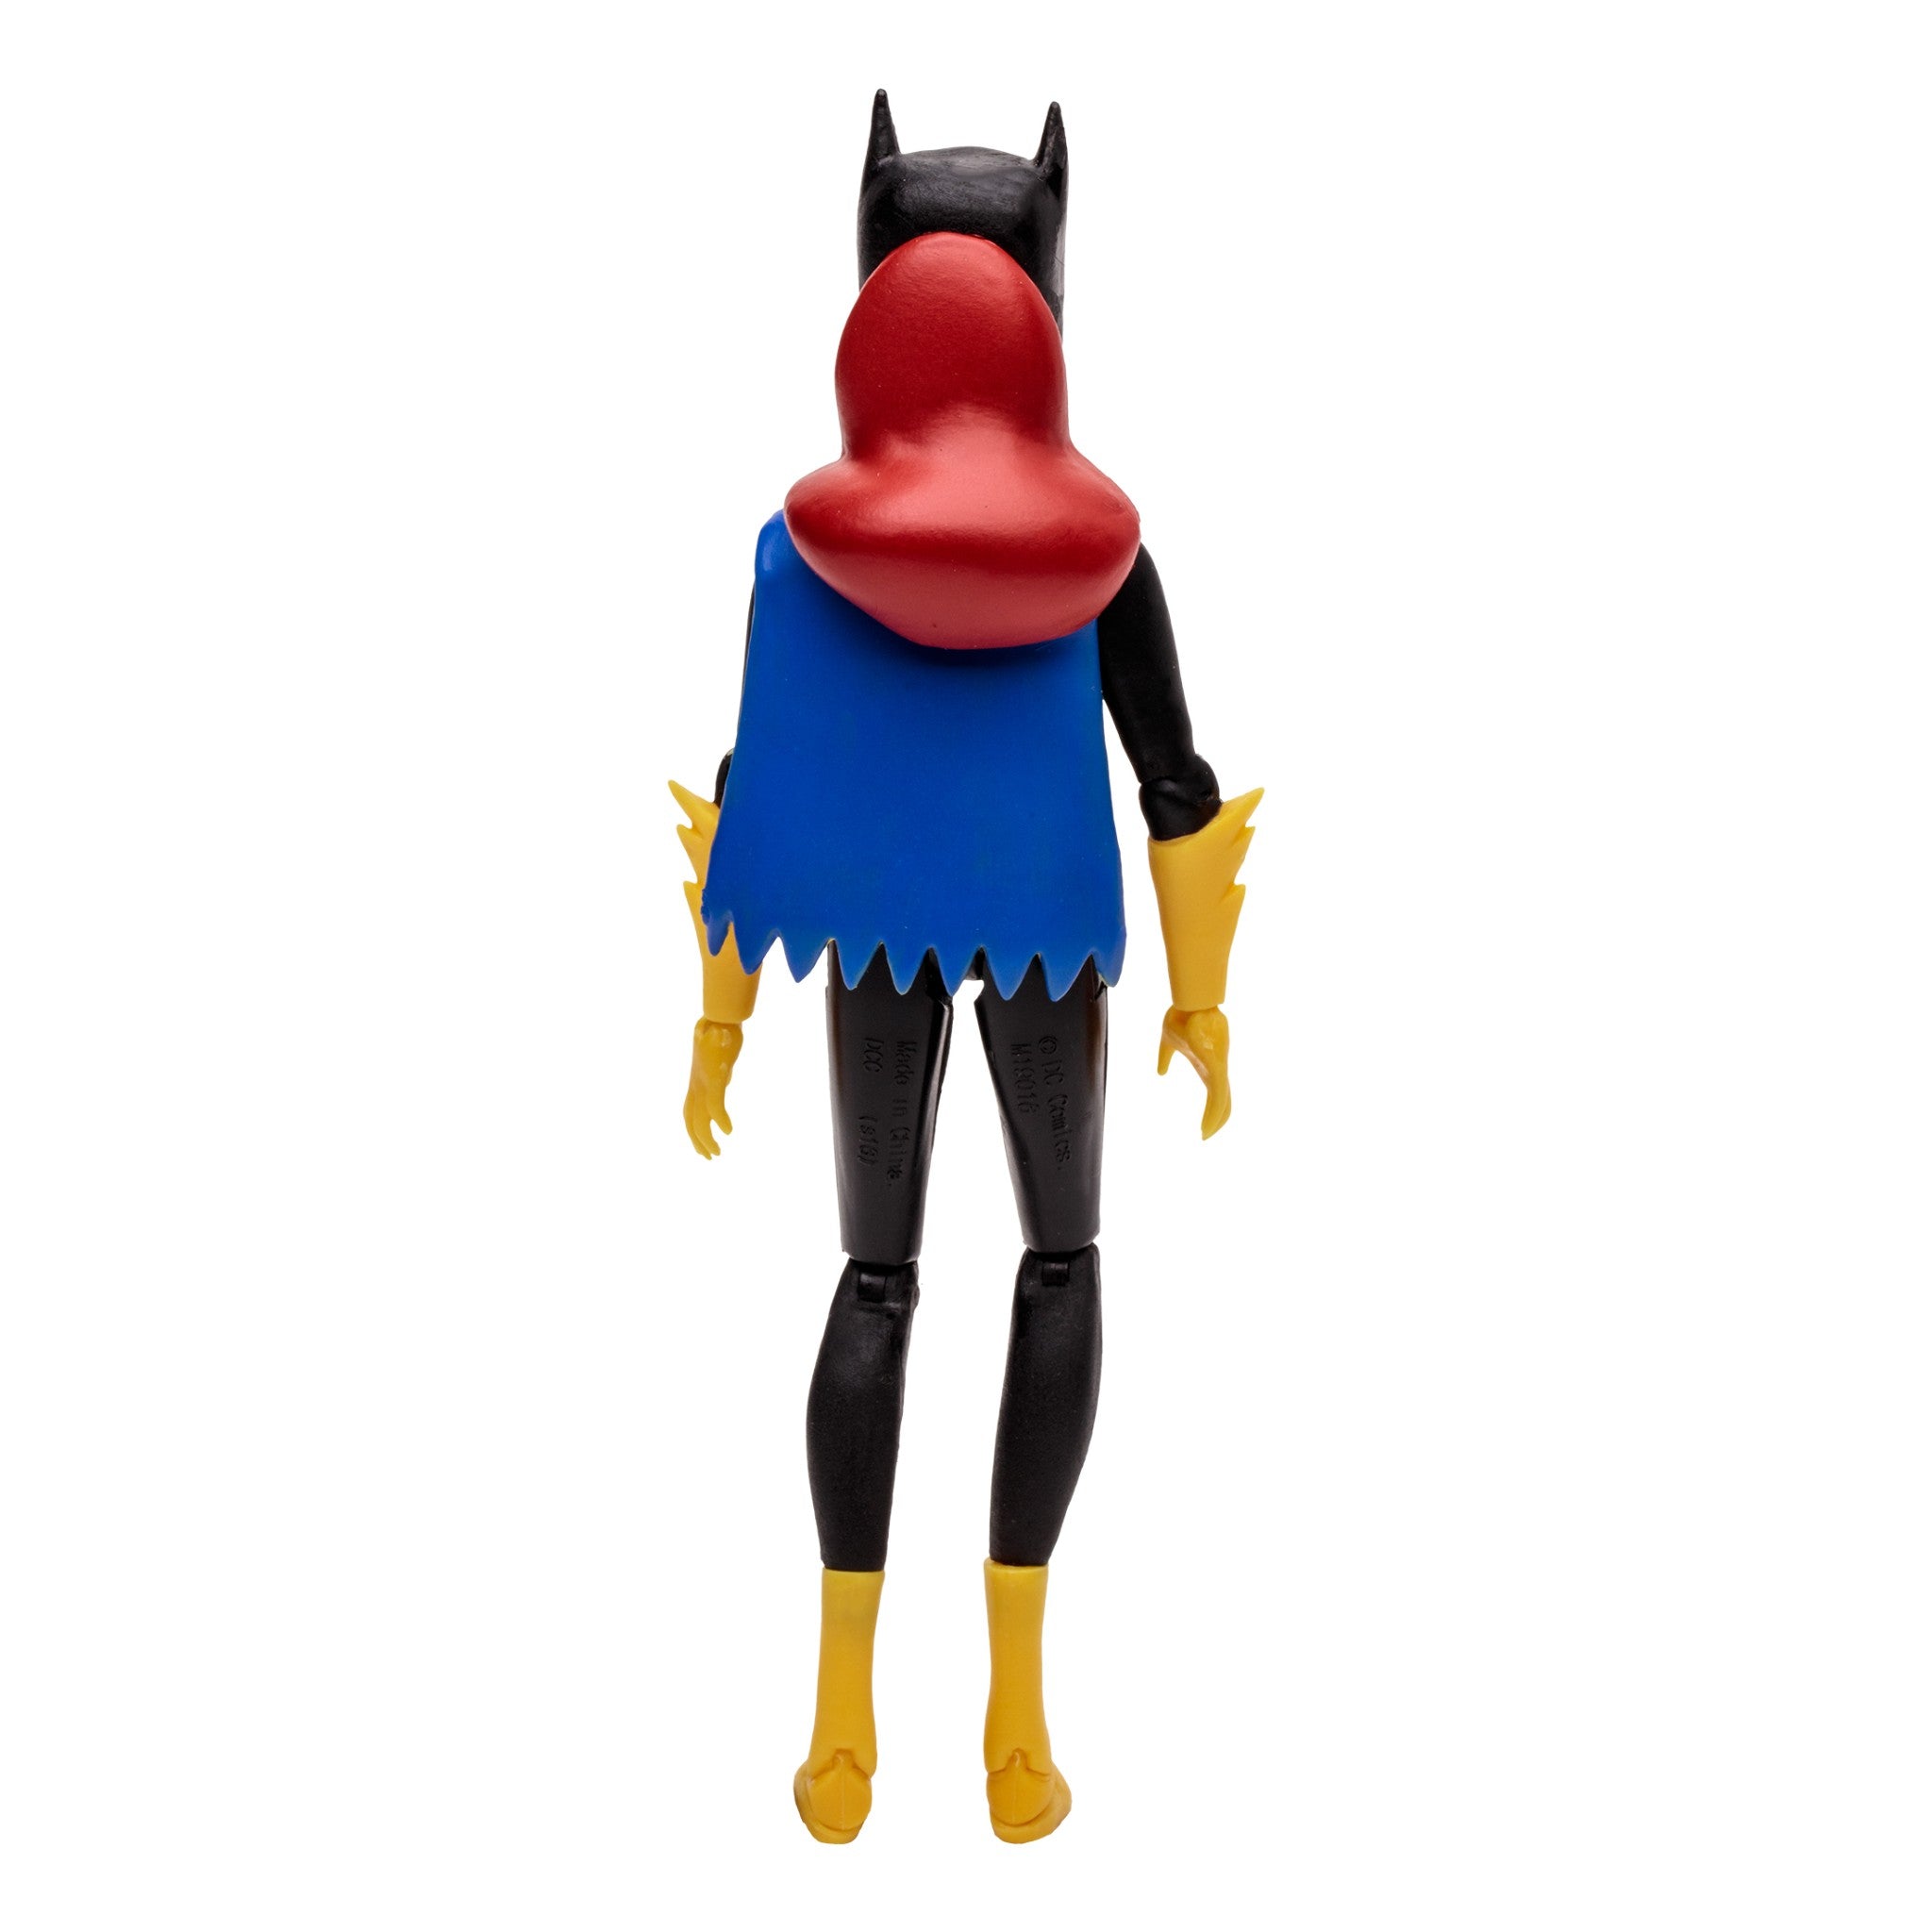 DC Direct The New Batman Adventures Batgirl - McFarlane Toys